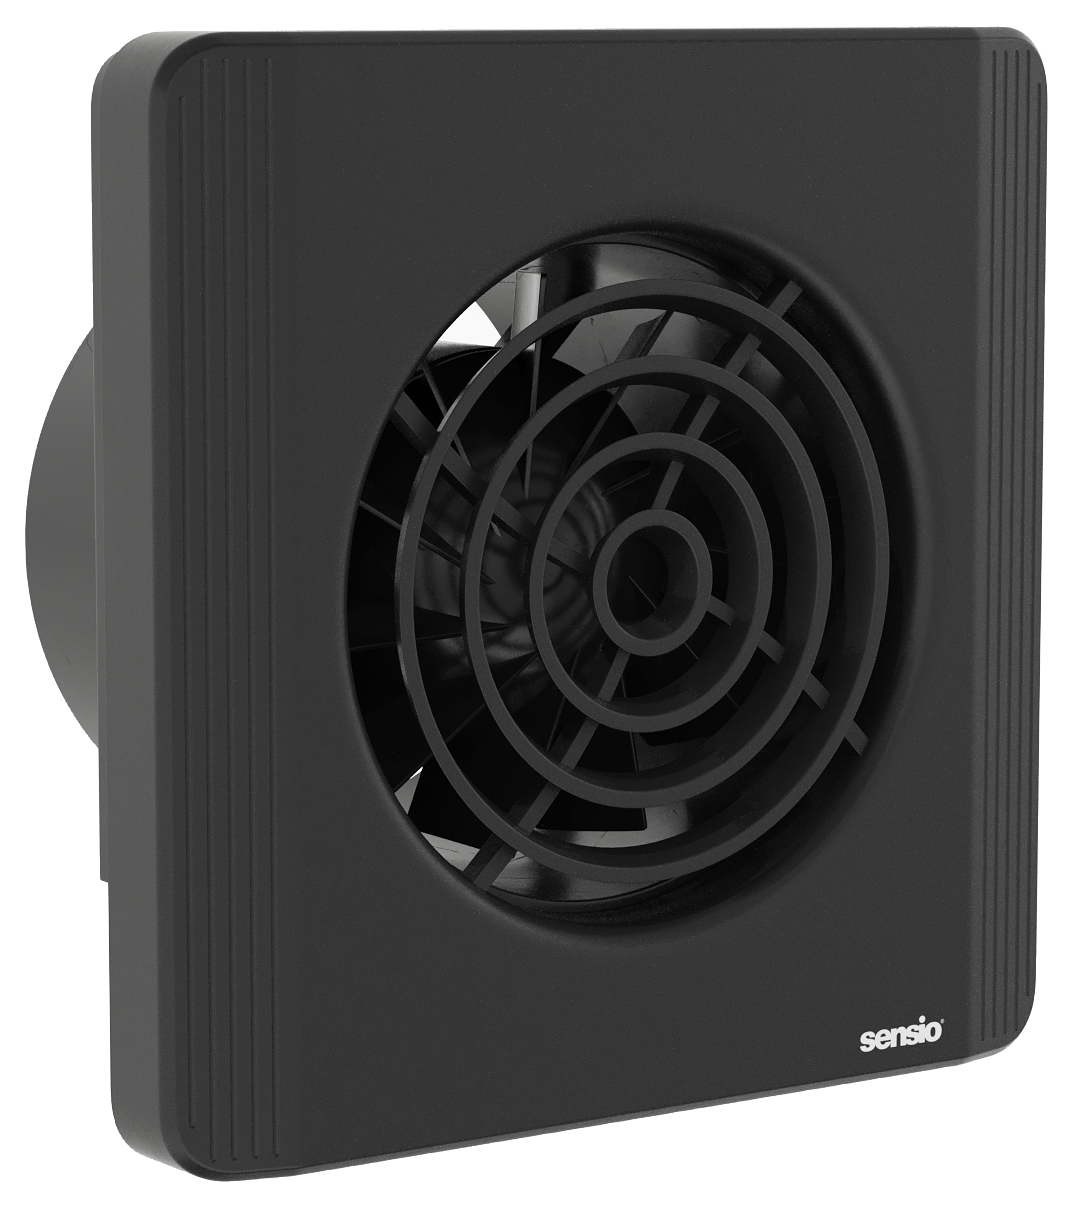 Image of Sensio Layci Black Wall Ventilation Fan with Aquilo Ventilation Ducting Kit - ø100mm